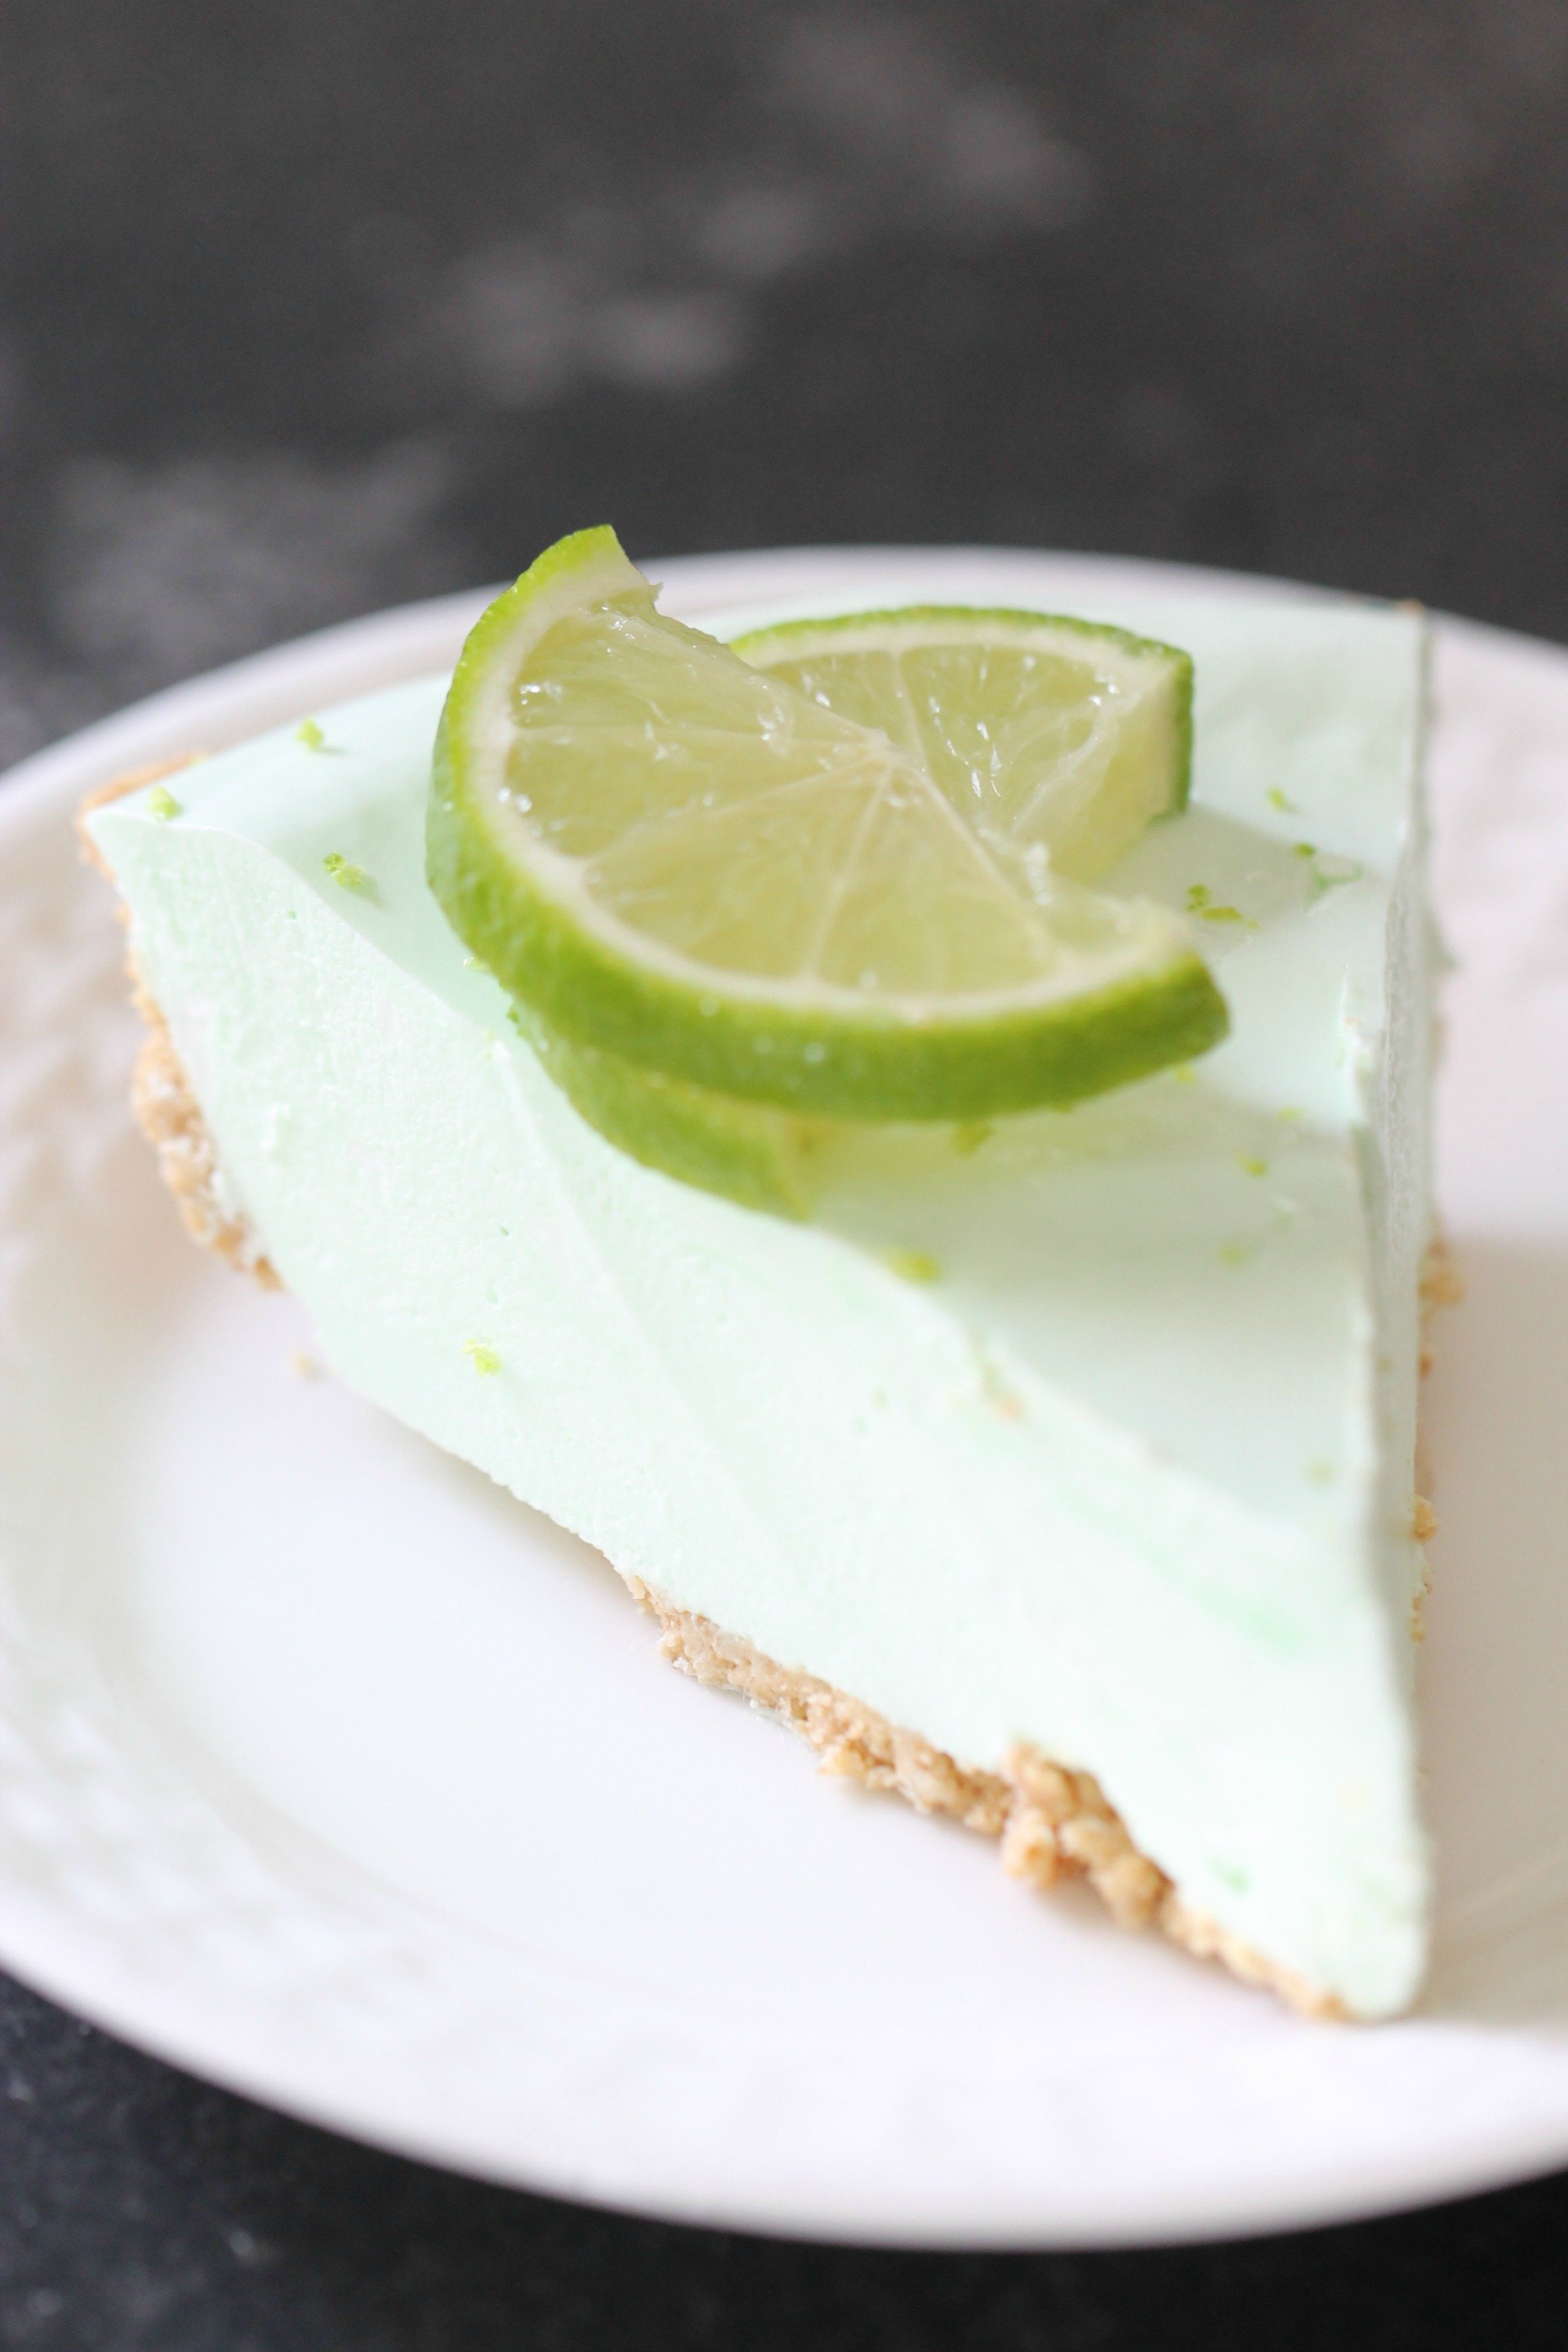 5 Minute Creamy Key Lime Pie Recipe